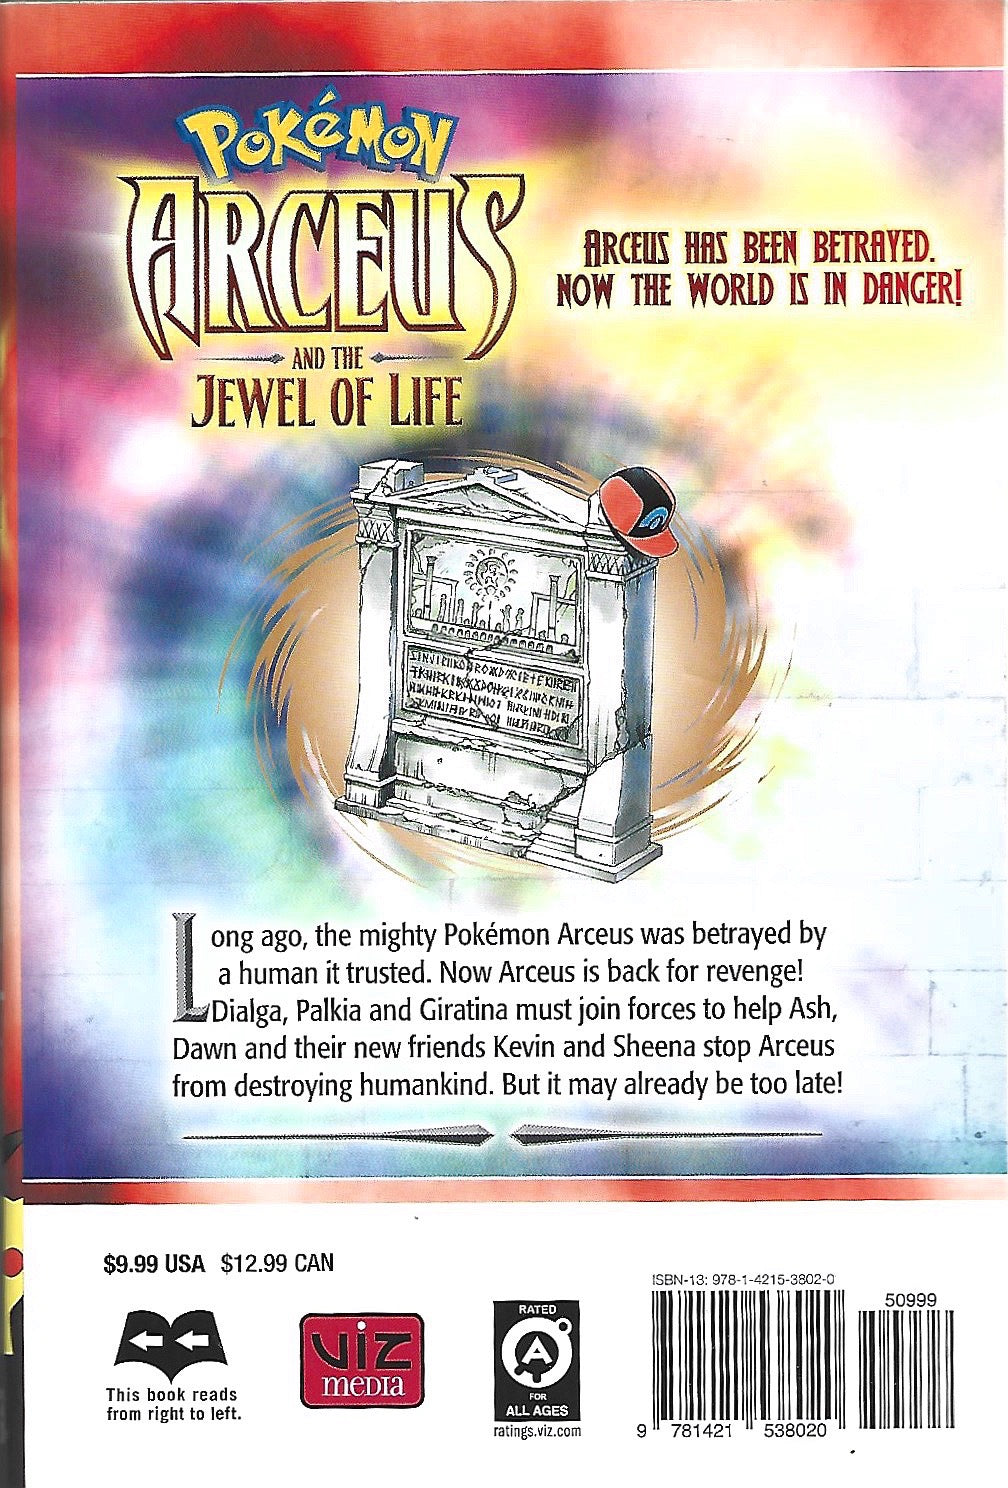 Pokémon: Arceus and the Jewel of Life Manga (Viz Media, 2011)